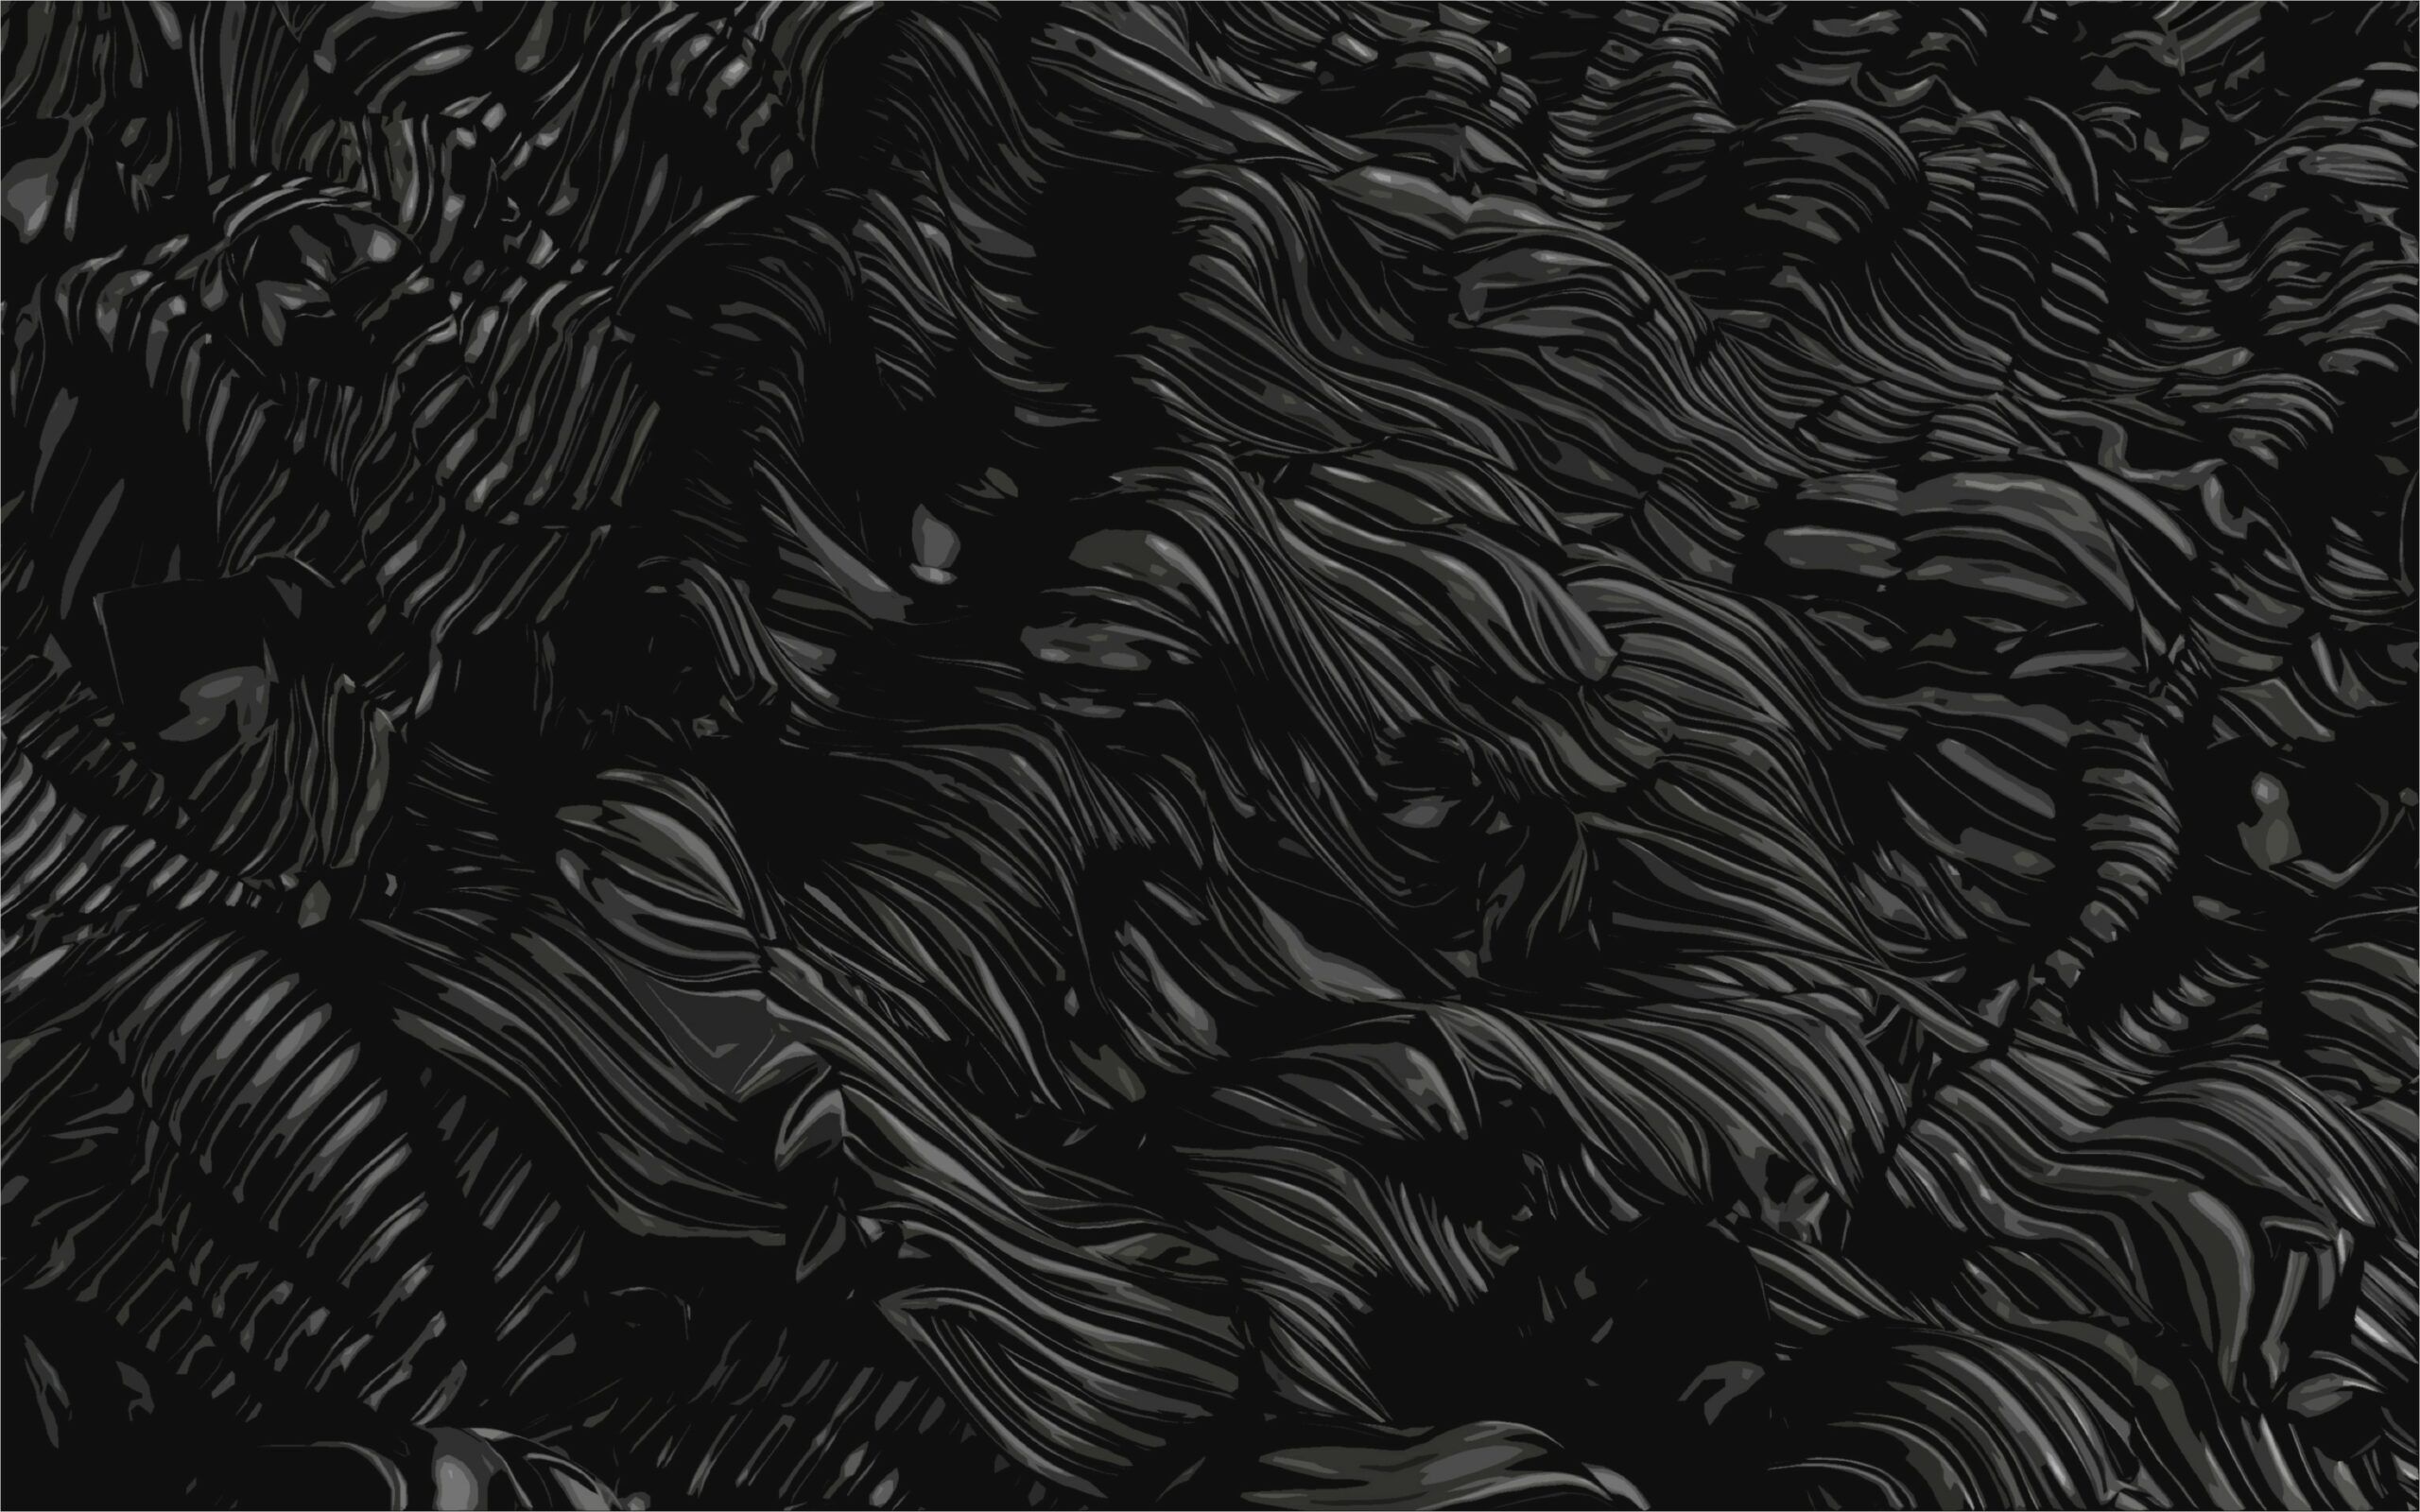 4K Black Wallpapers